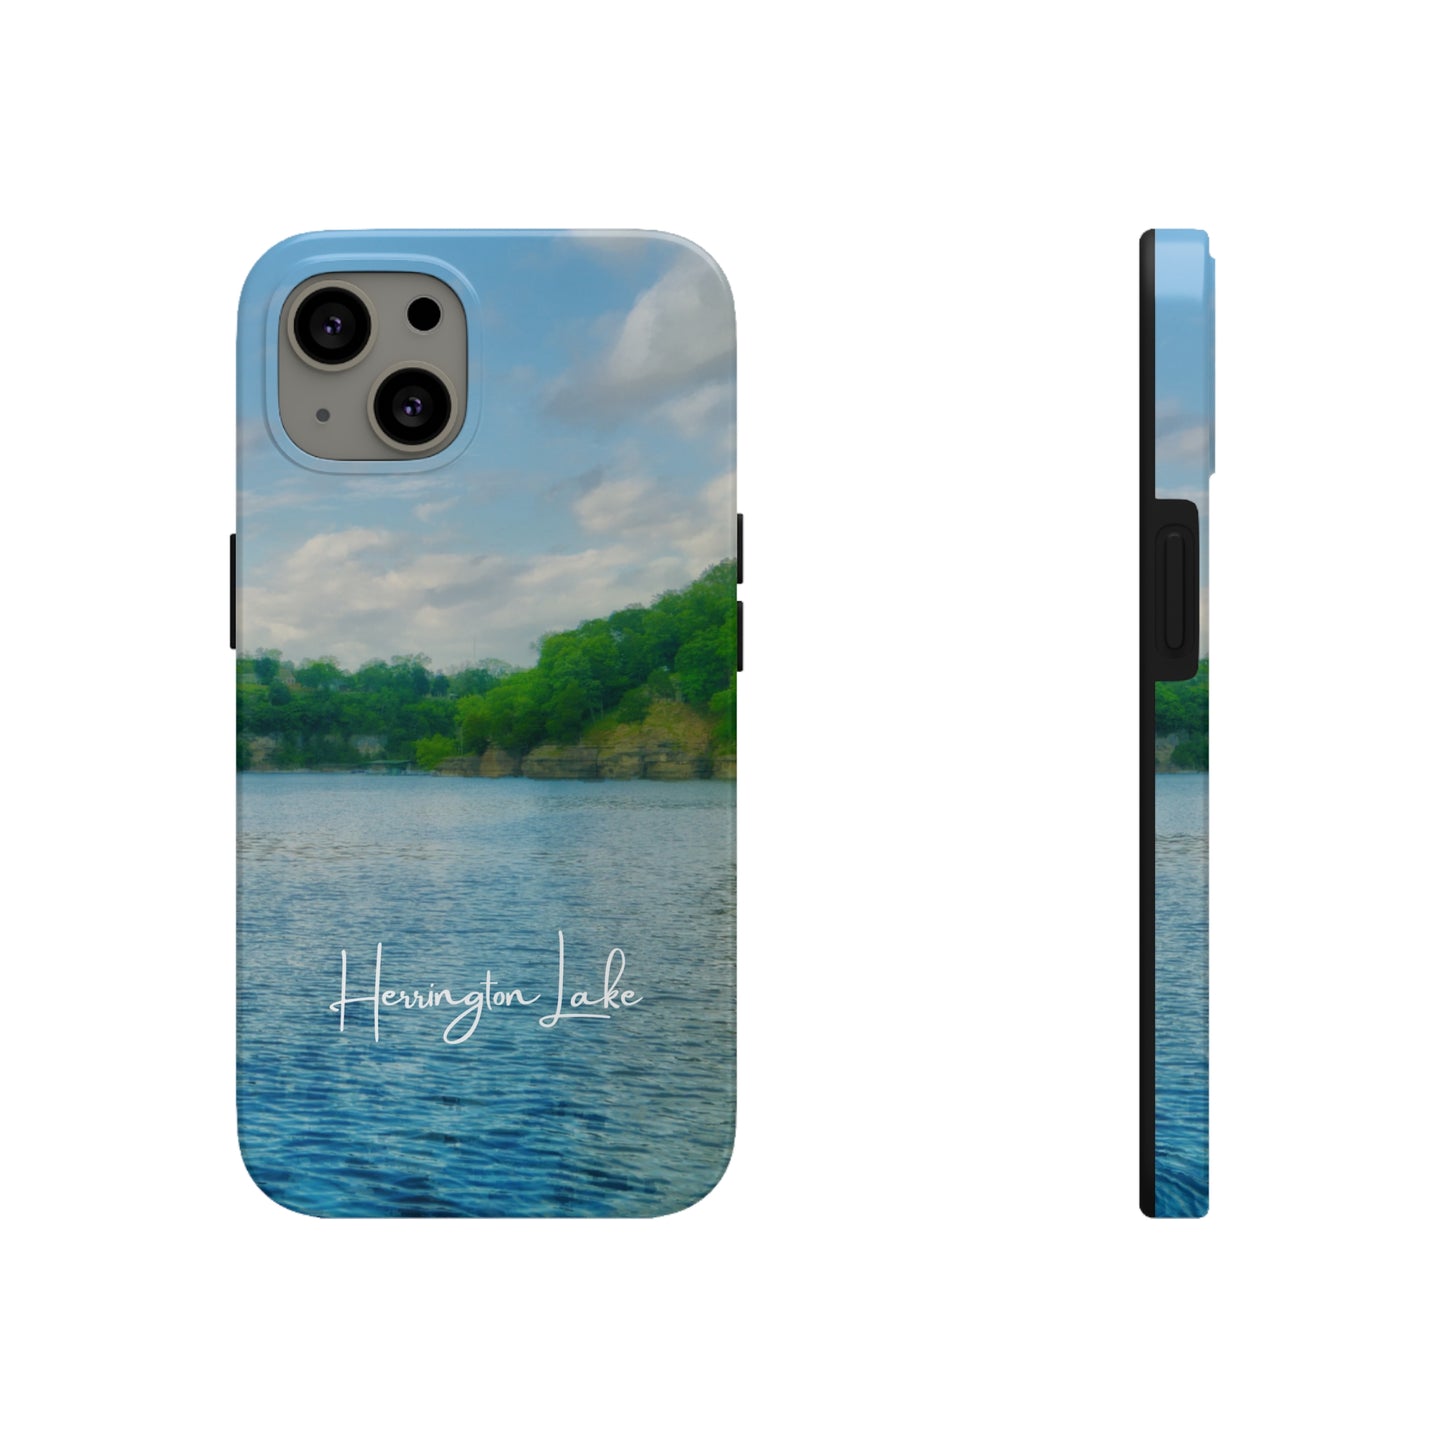 Herrington Lake "Lake Vista" Tough Phone Cases